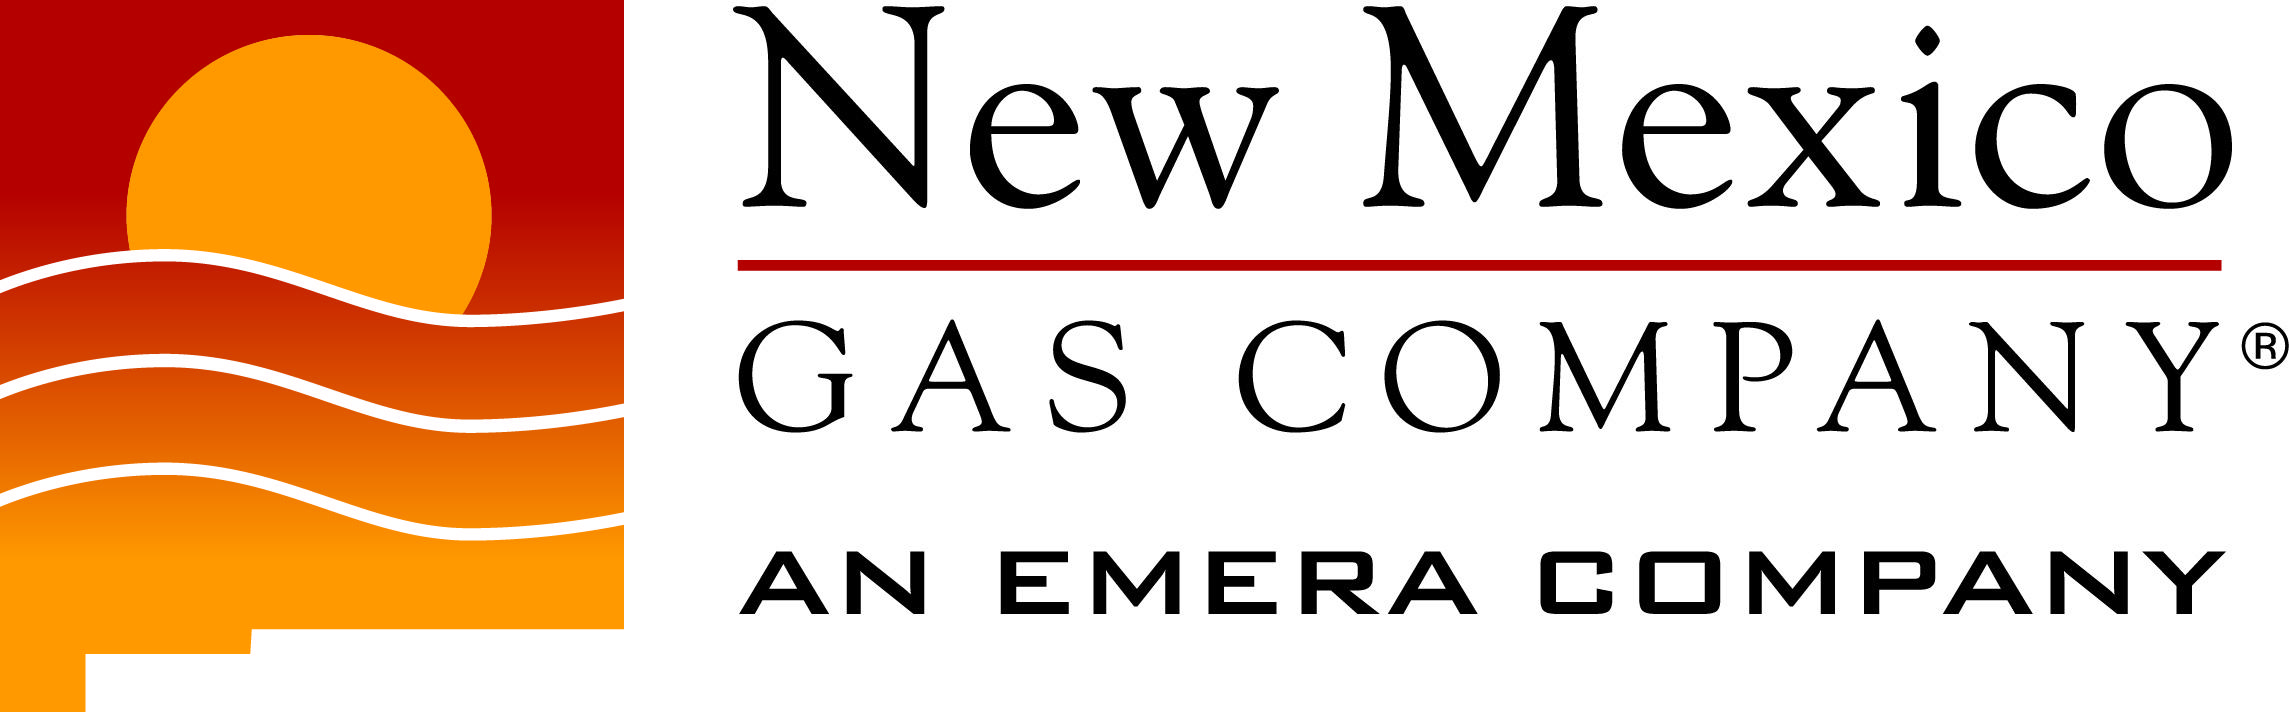 Gas Company Logo - new-mexico-gas-company-logo - New Mexico Ethics in Business Awards